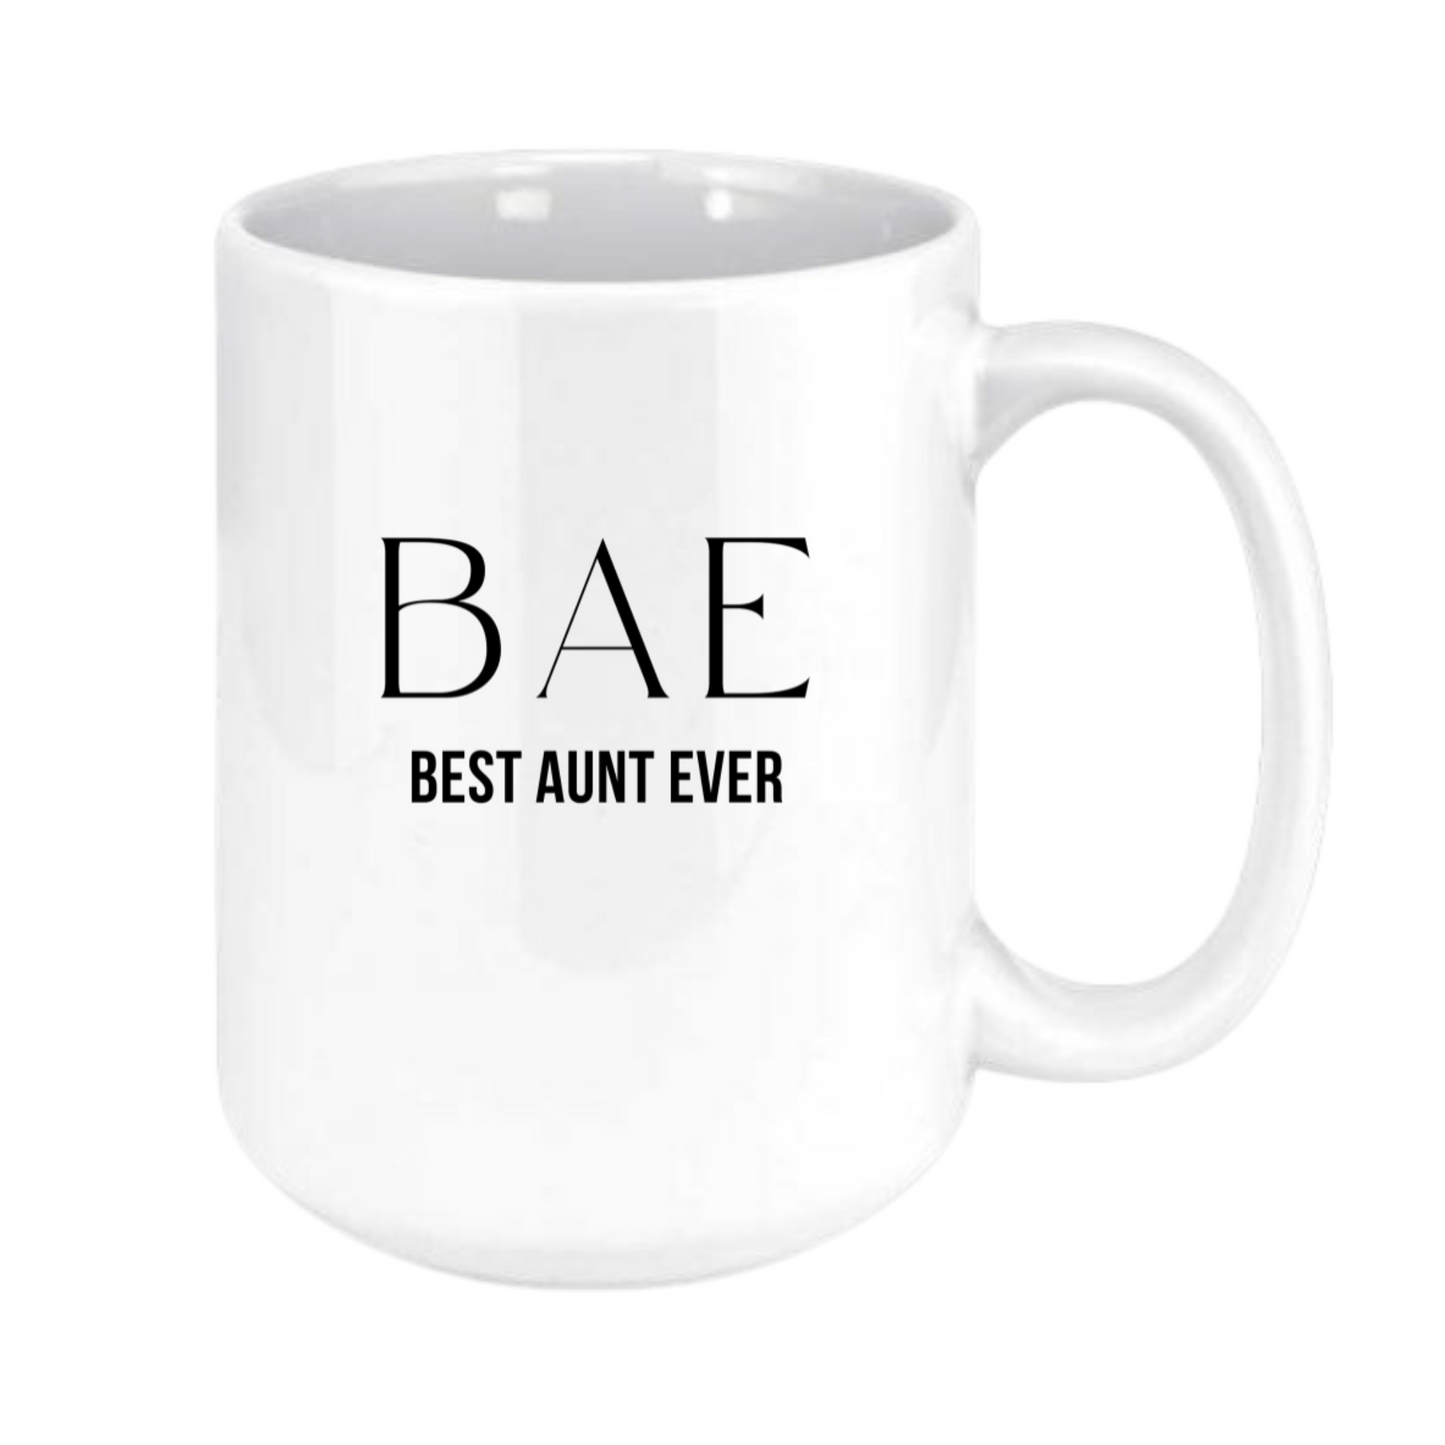 BAE- Best Aunt Ever Mug